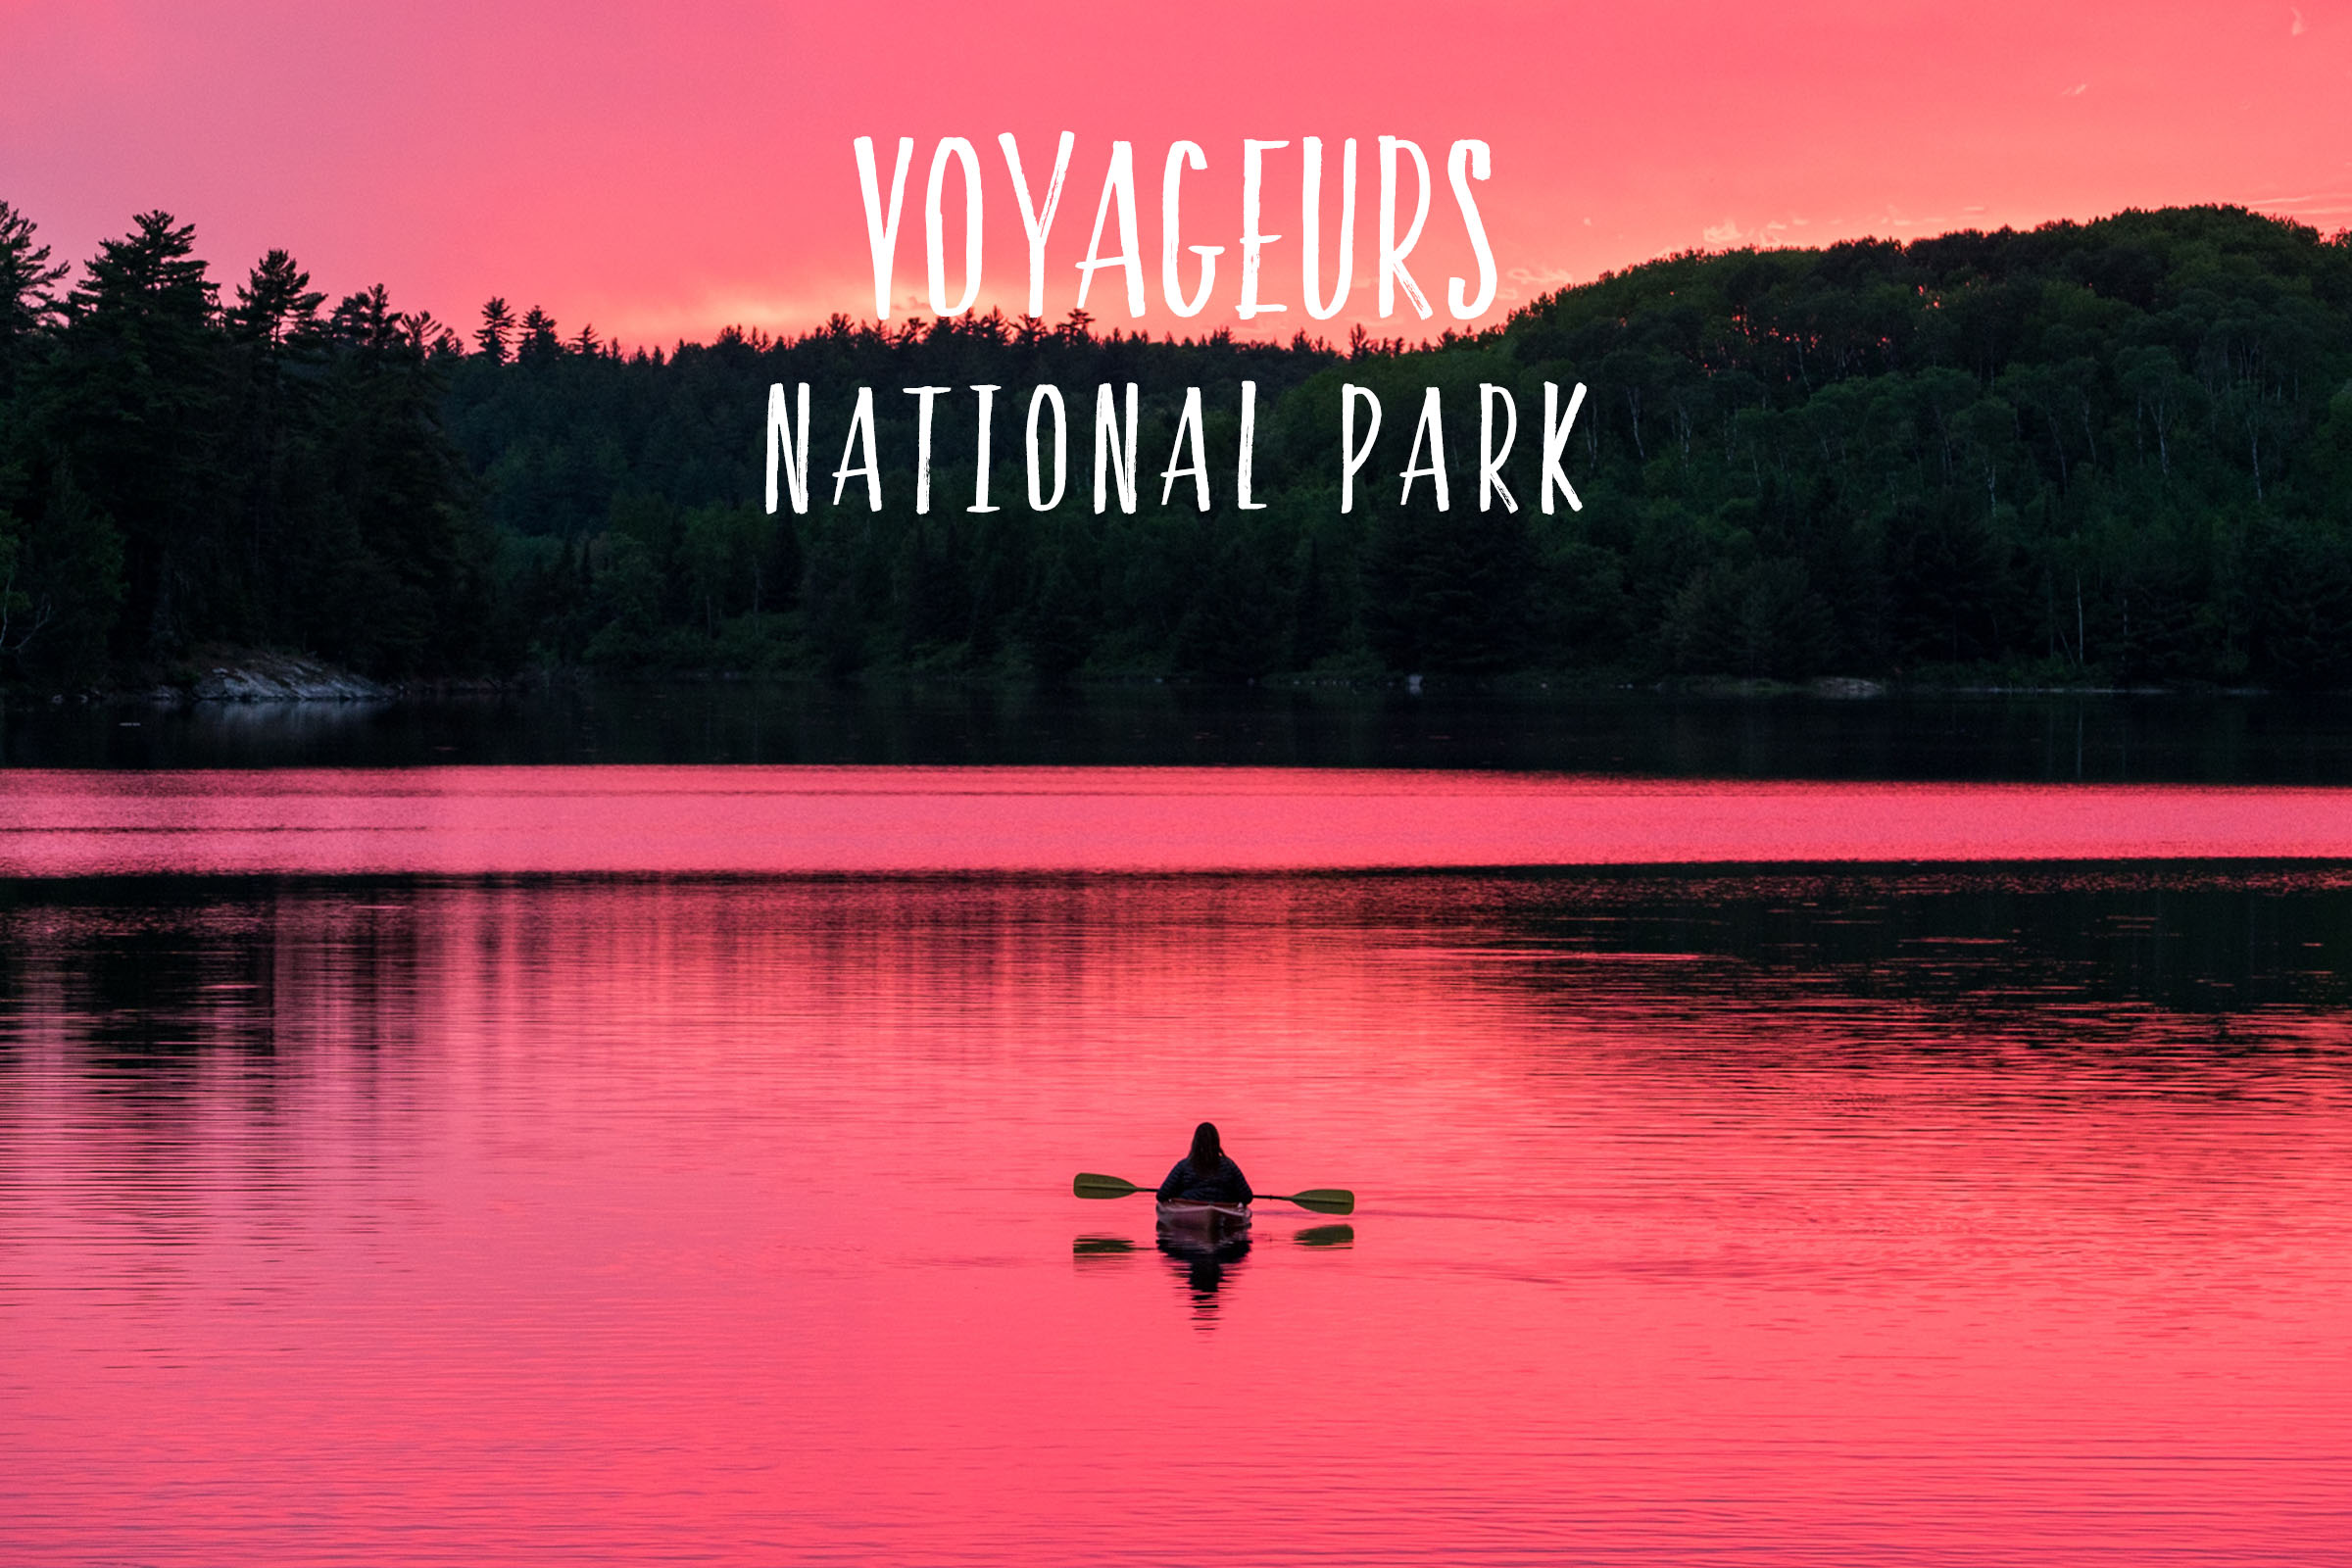 Park 27/59: Voyageurs National Park in Minnesota